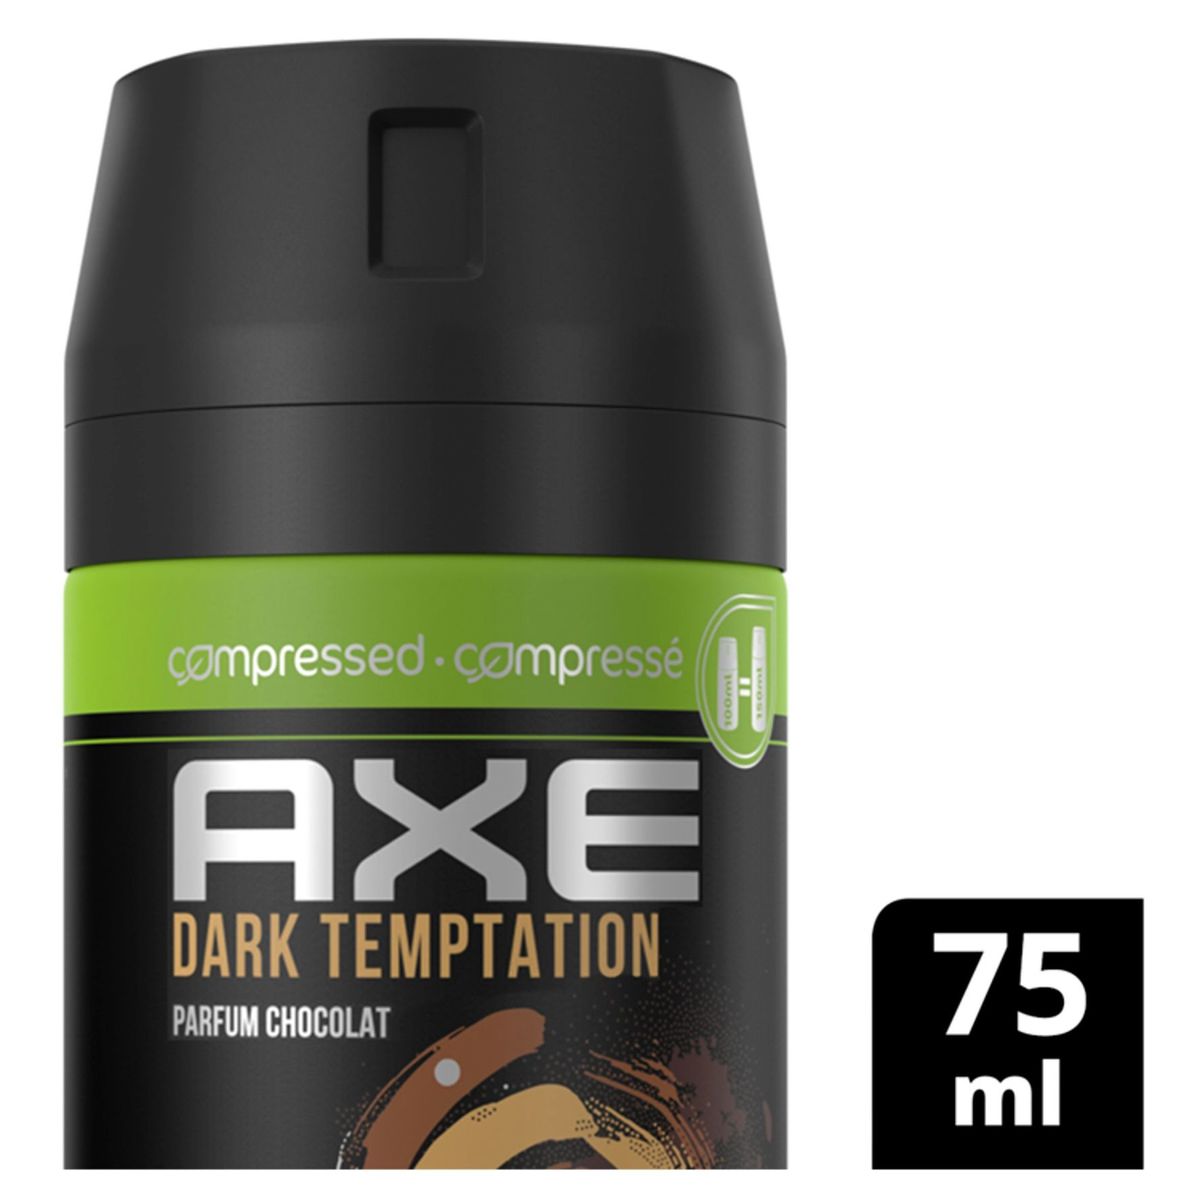 Axe  Compressed Spray Déodorant Bodyspray Dark Temptation 100 ml